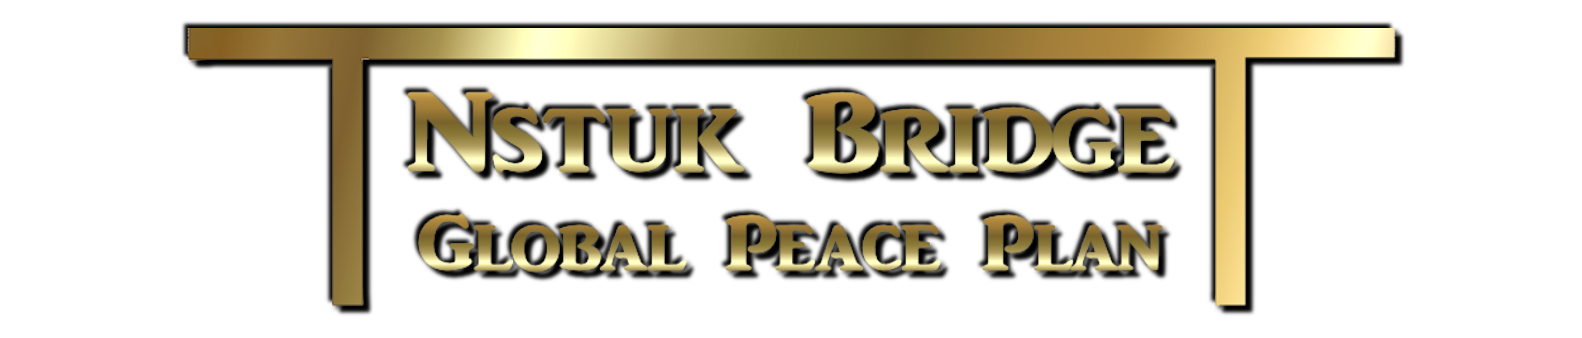 Nstuk Bridge Global Peace Plan Logo